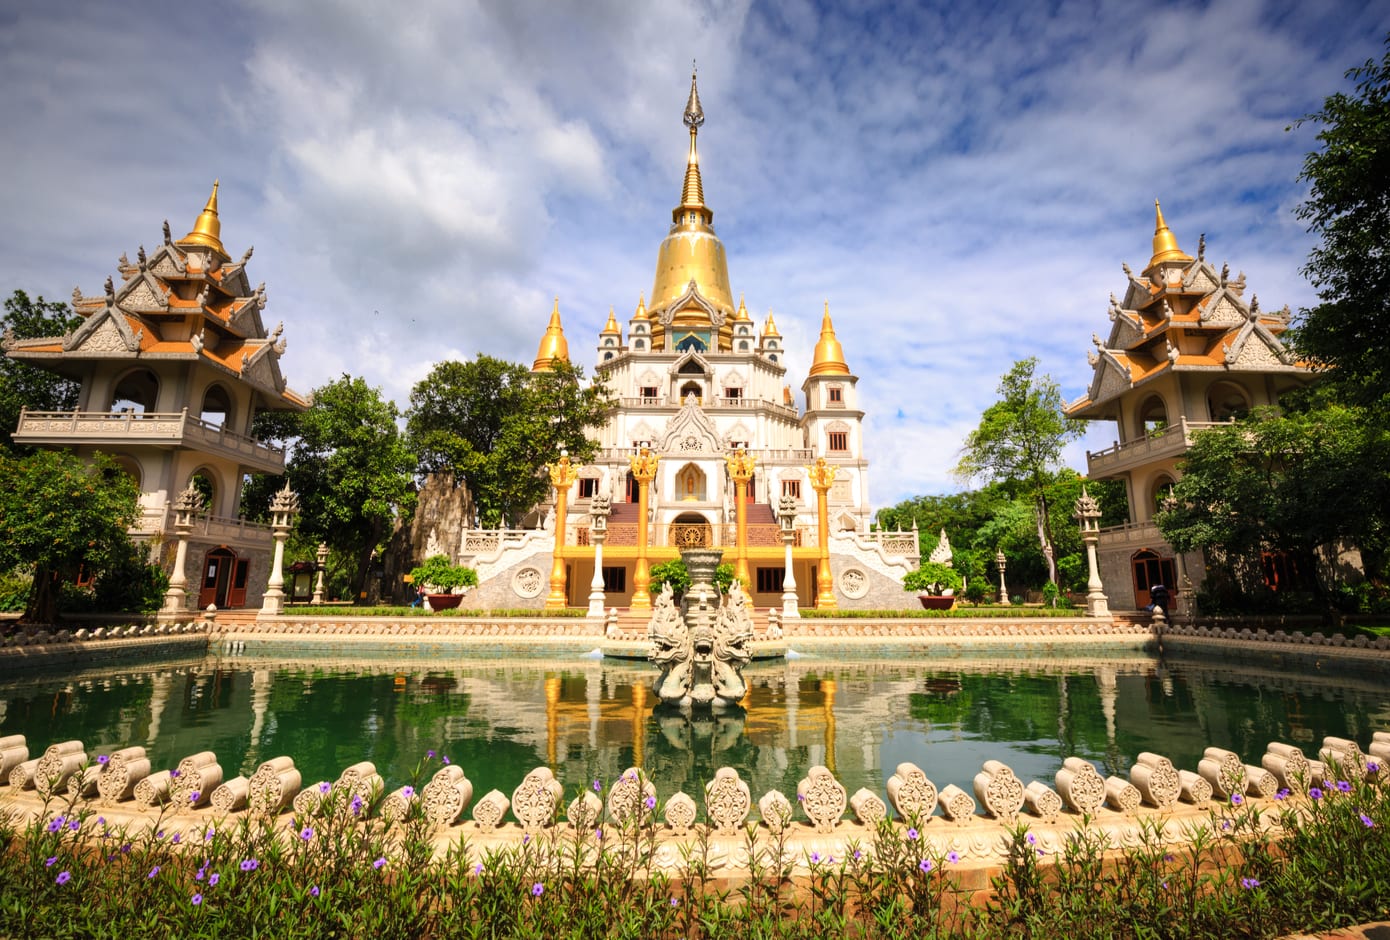 Buu Long Buddhist temple in Ho Chi Minh City, Vietnam 